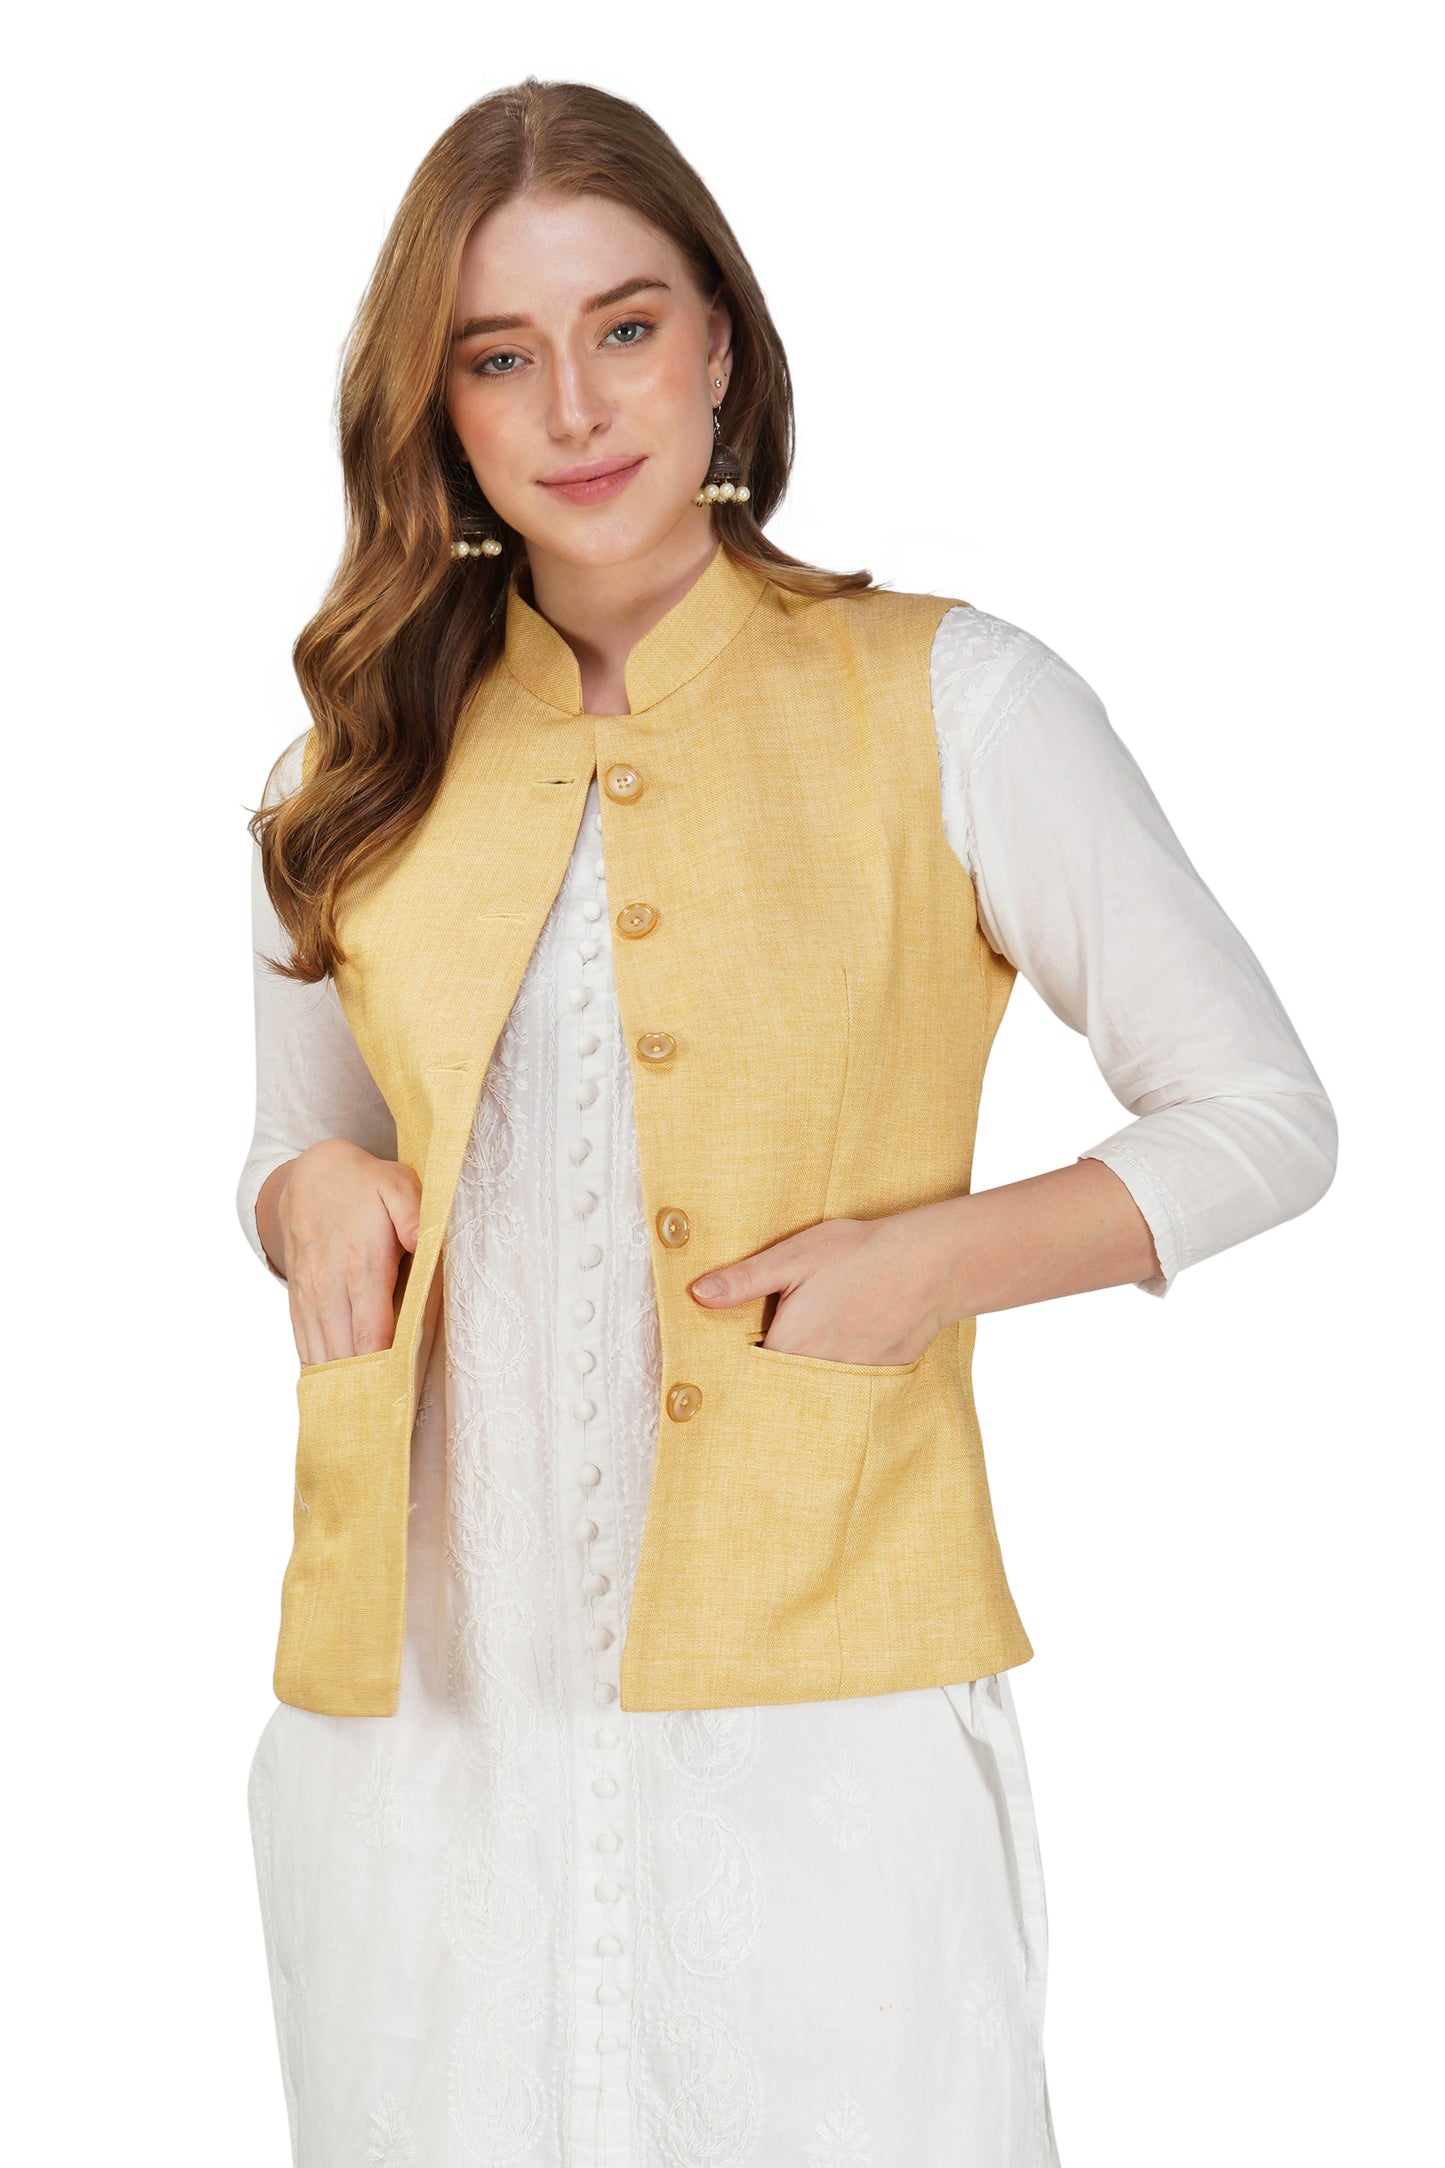 Vastraa Fusion Ladies Modi Jacket / Waistcoat - Plain Solid Colors - Cotton Mix Nehru Jacket